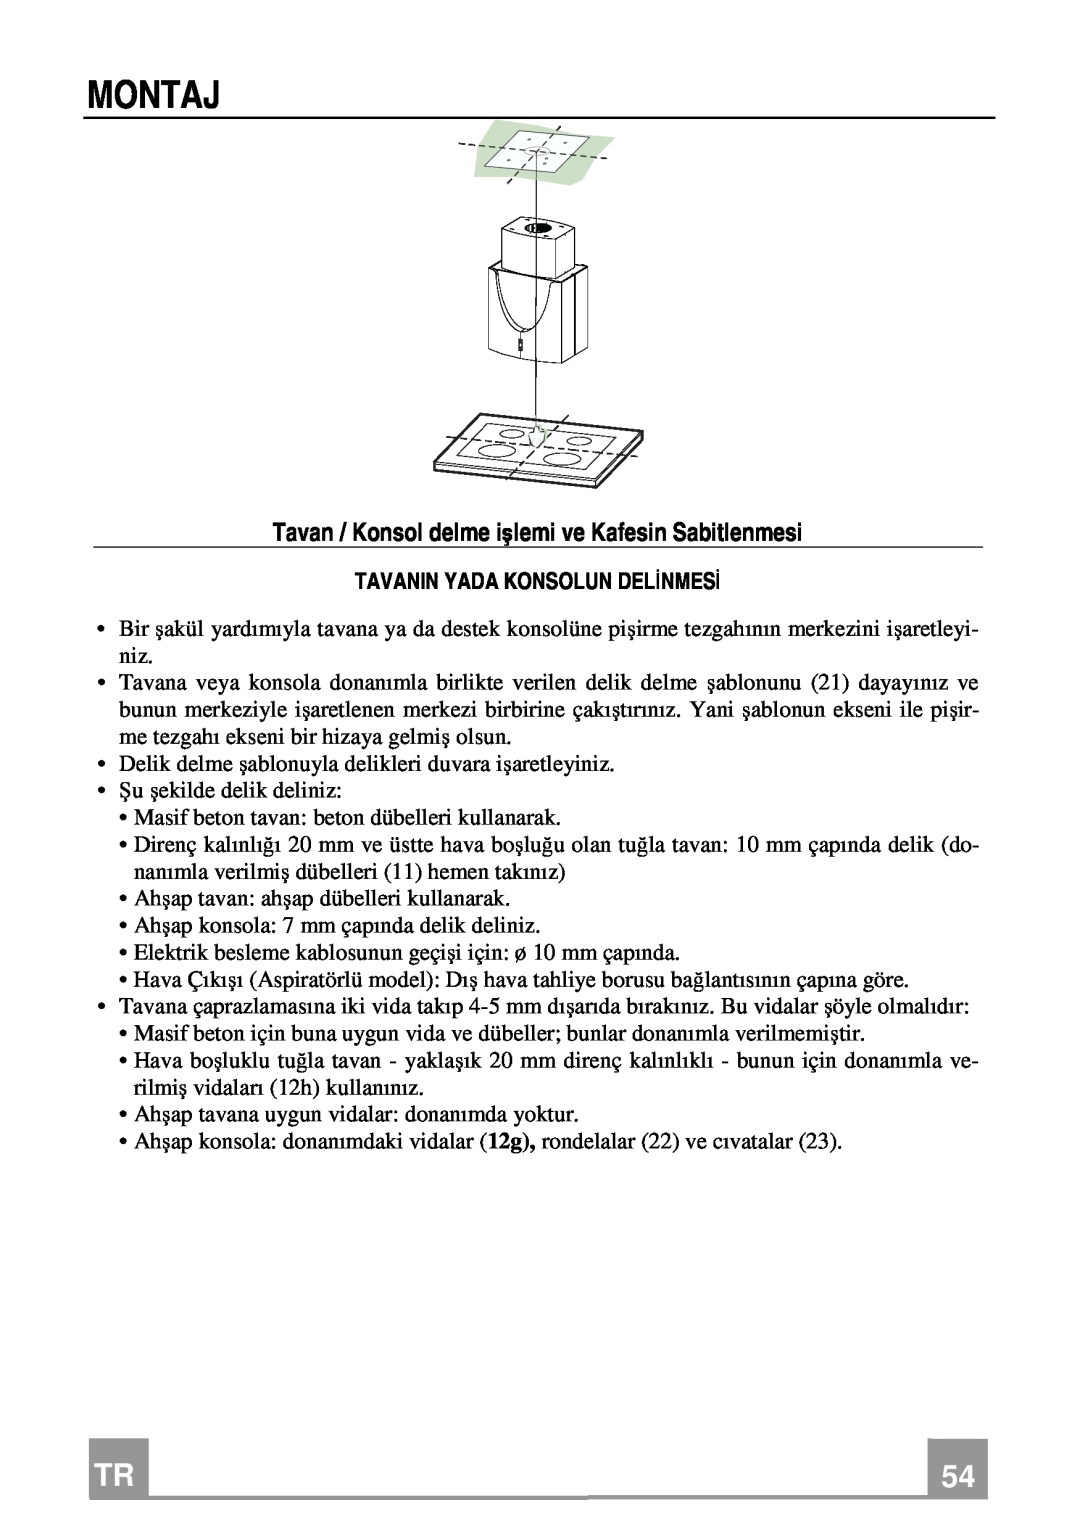 Franke Consumer Products FDMO 607 I manual Montaj, Tavanin Yada Konsolun Delinmesi 